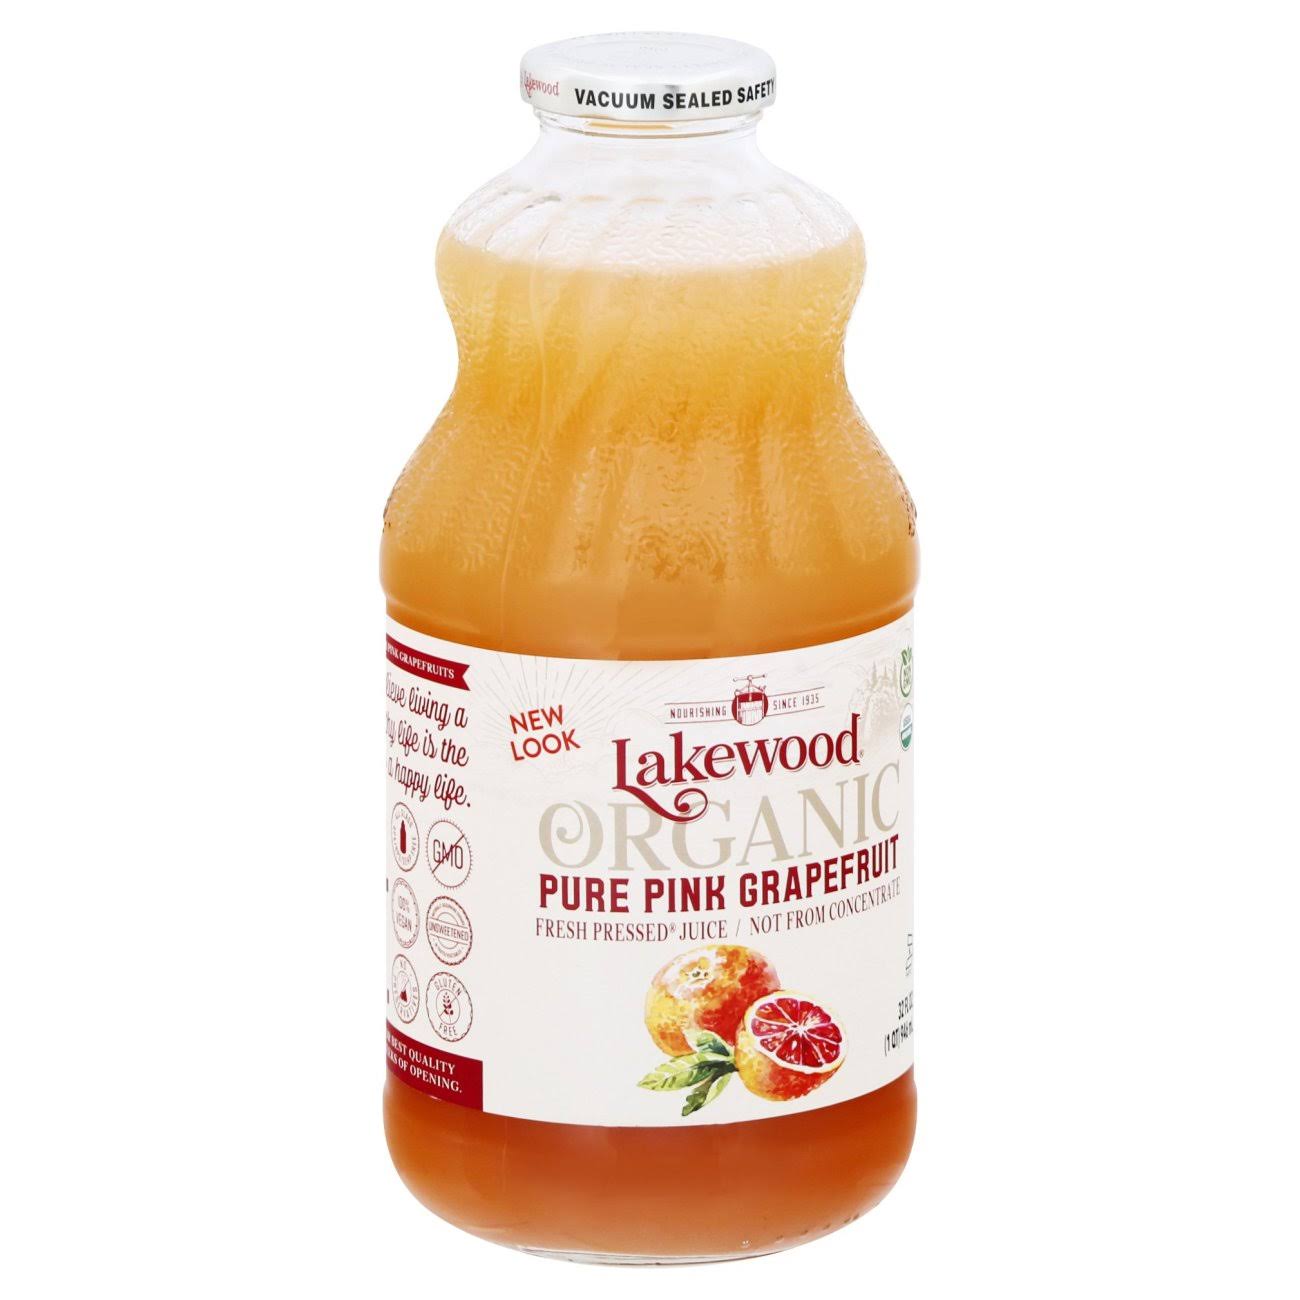 Lakewood Organic Pure Pink Grapefruit Juice